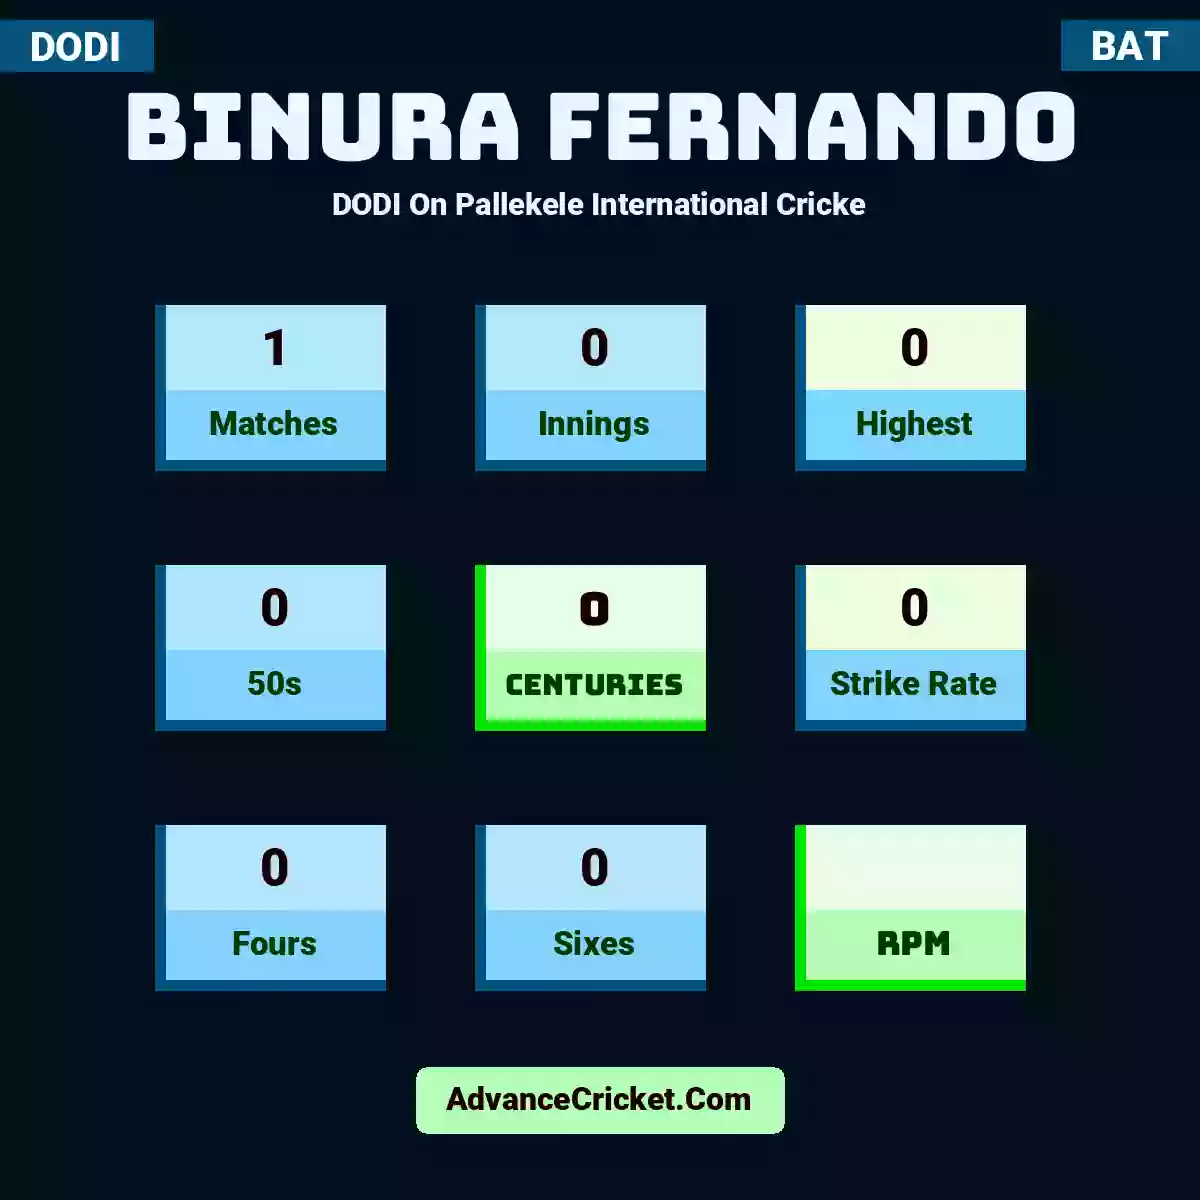 Binura Fernando DODI  On Pallekele International Cricke, Binura Fernando played 1 matches, scored 0 runs as highest, 0 half-centuries, and 0 centuries, with a strike rate of 0. B.Fernando hit 0 fours and 0 sixes.